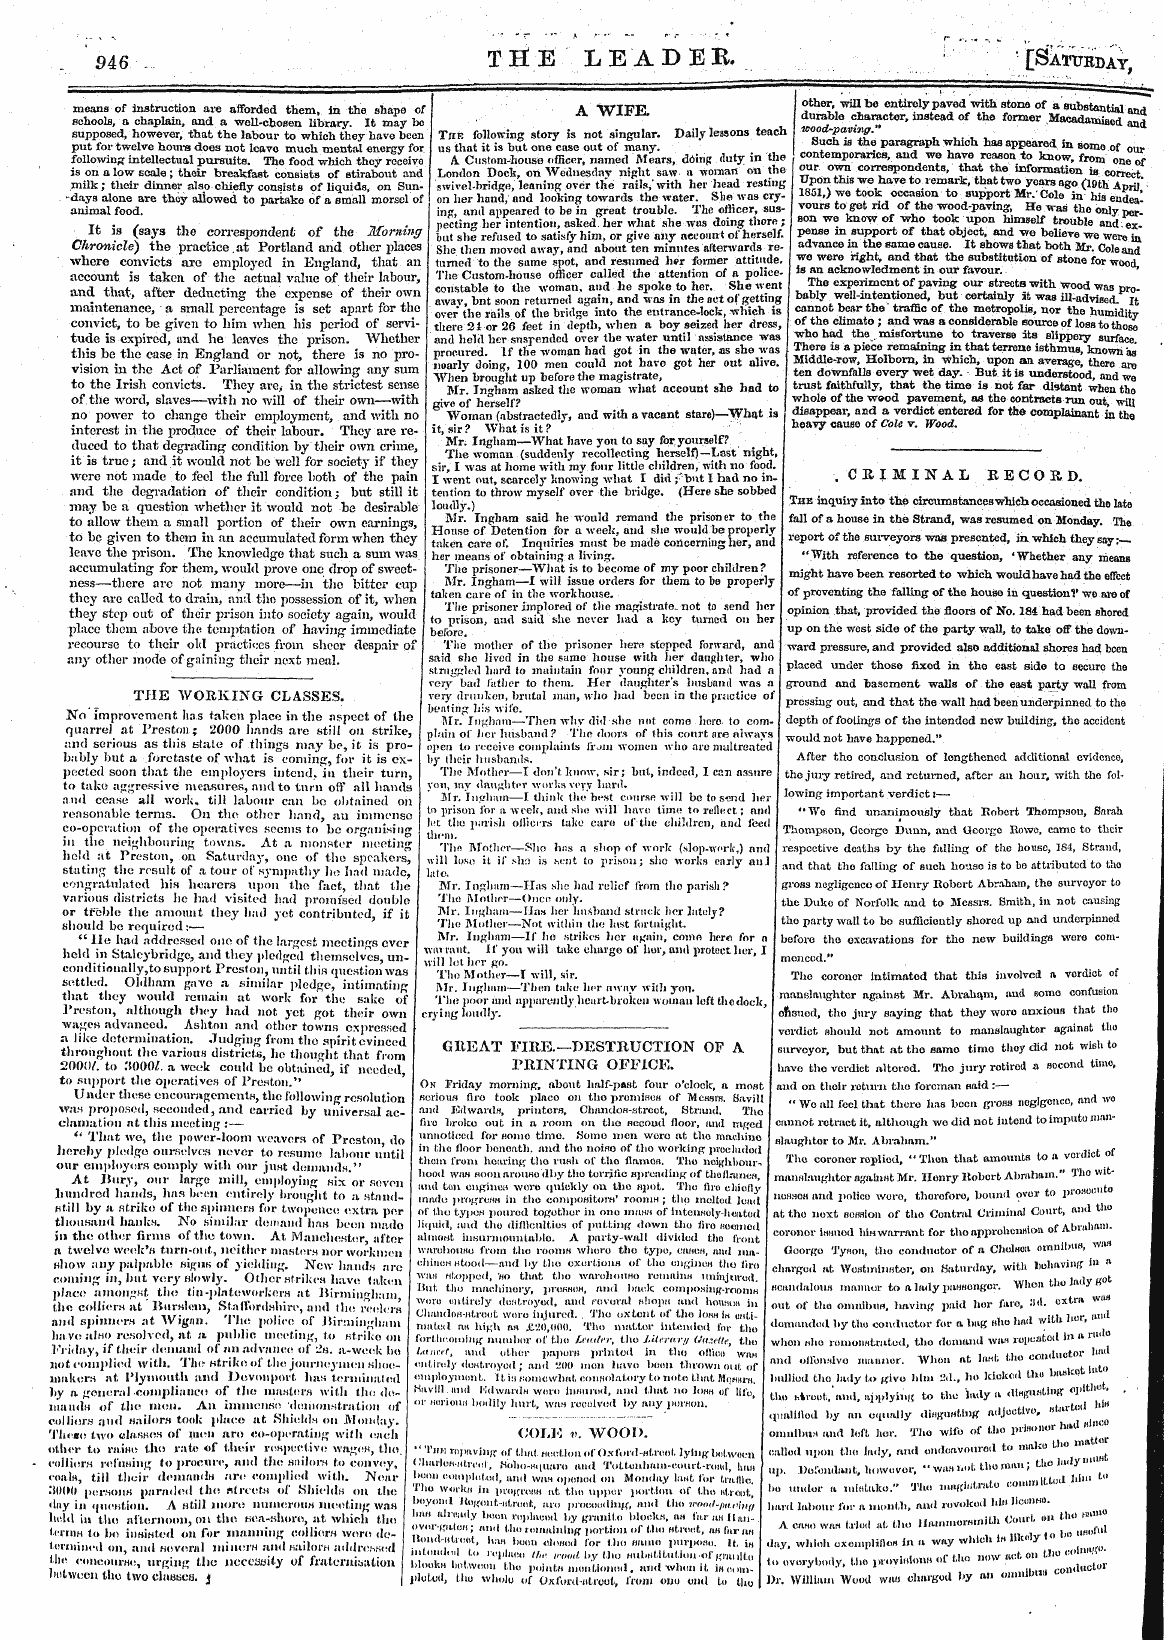 Leader (1850-1860): jS F Y, 2nd edition - ' 946 . Tfle Leadek, L [Sattjrday ,